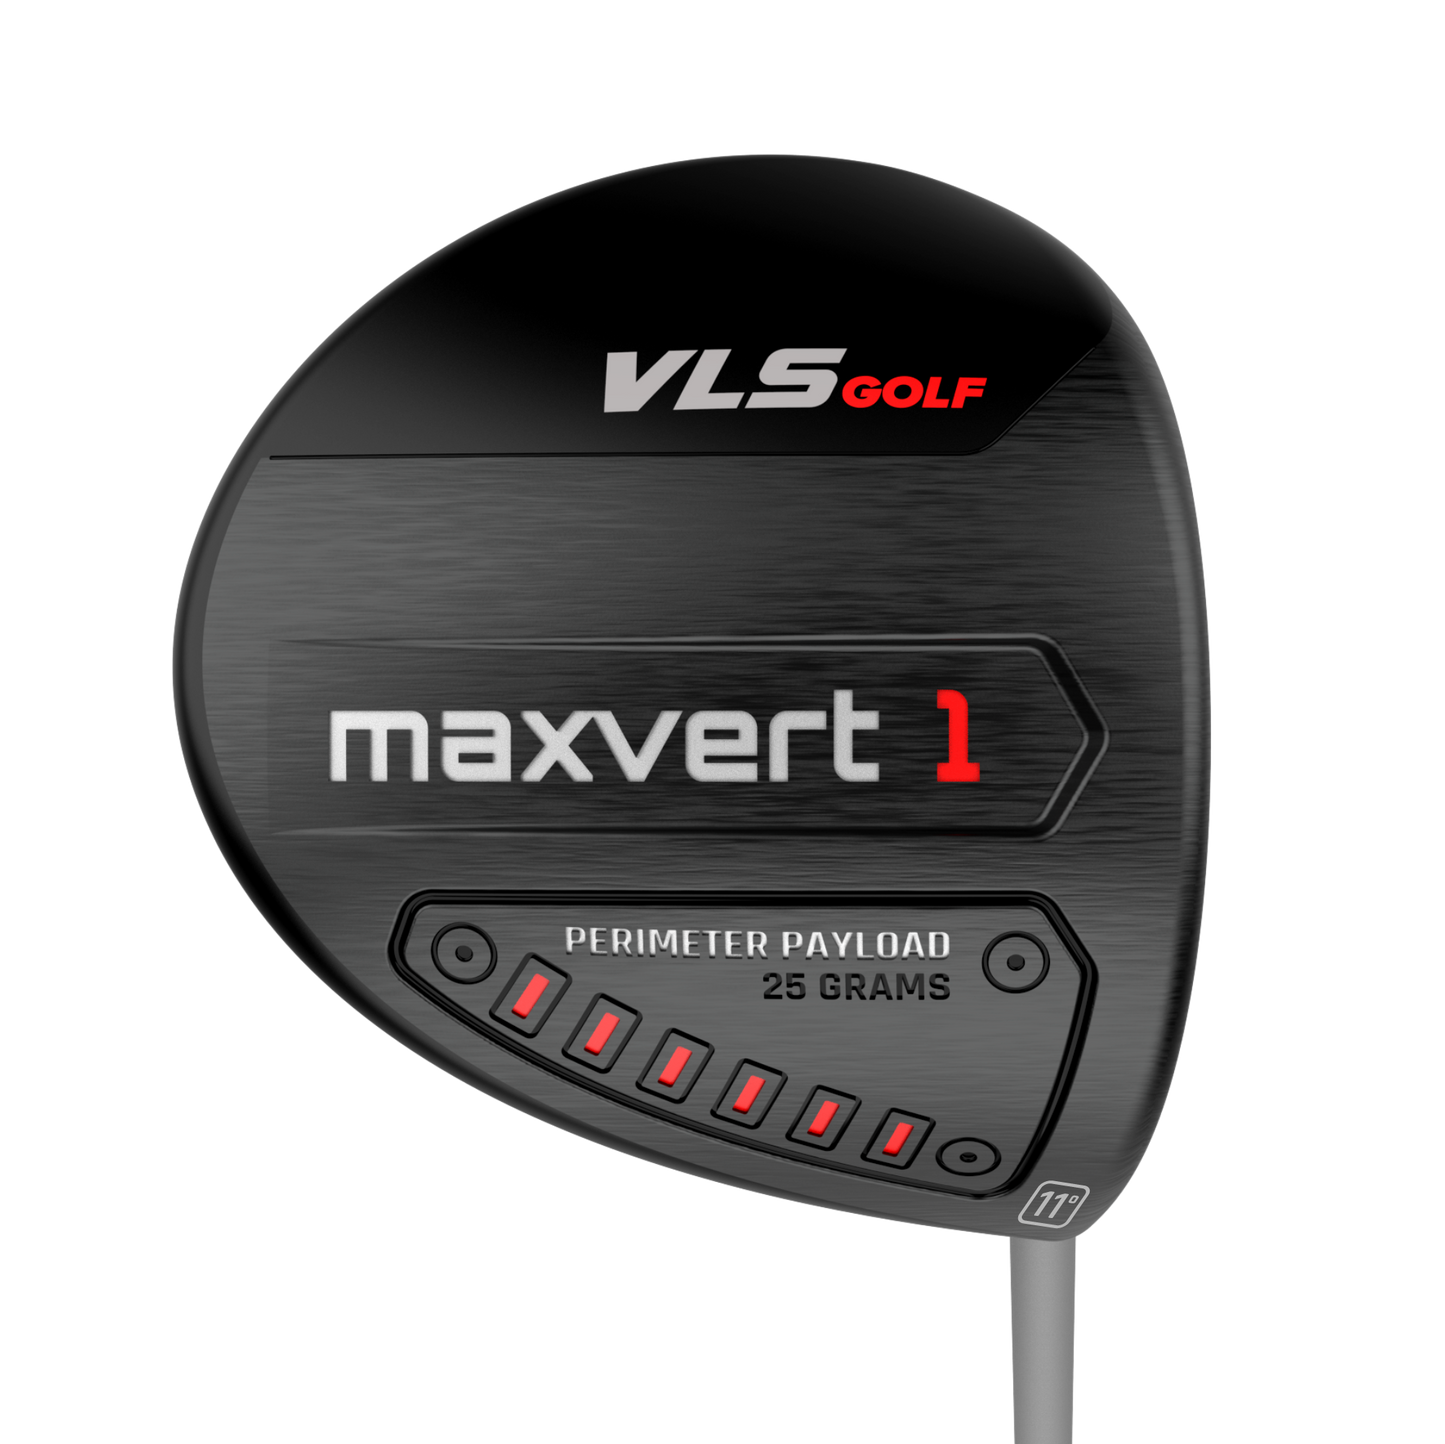 VLS Maxvert 1 Driver Special